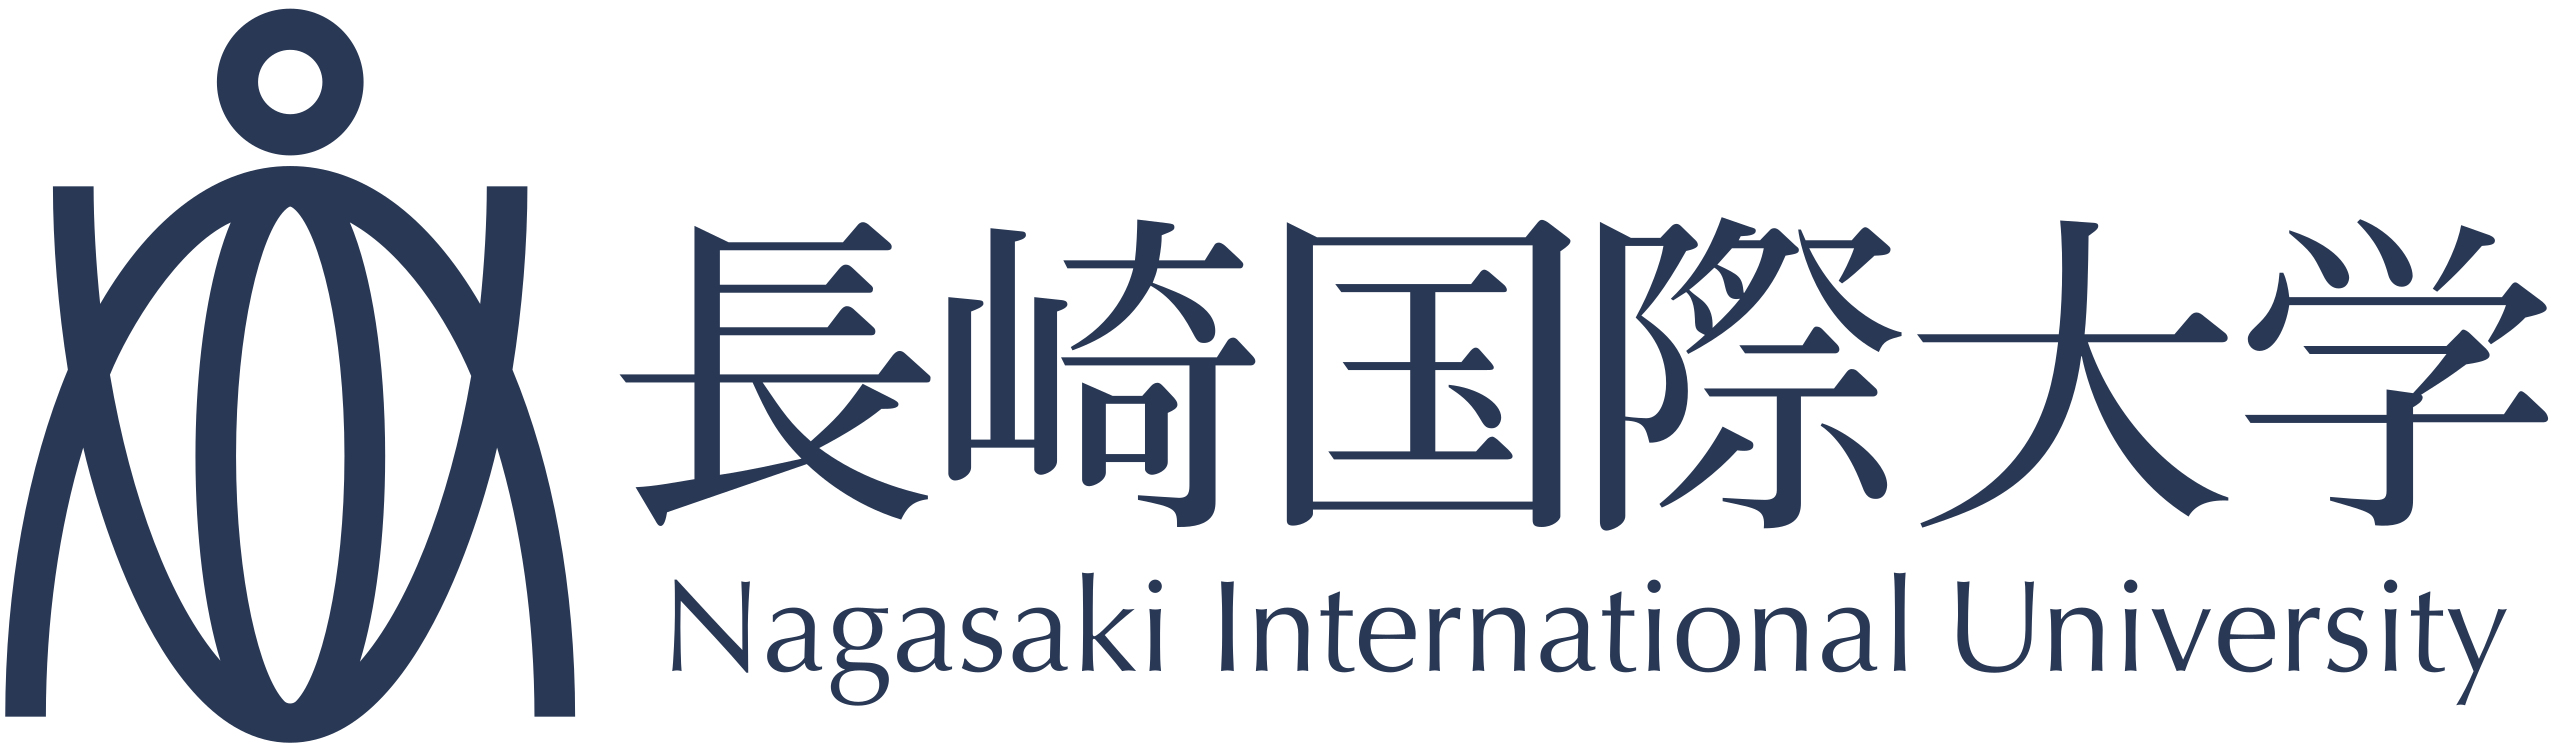 Nagasaki International University Japan